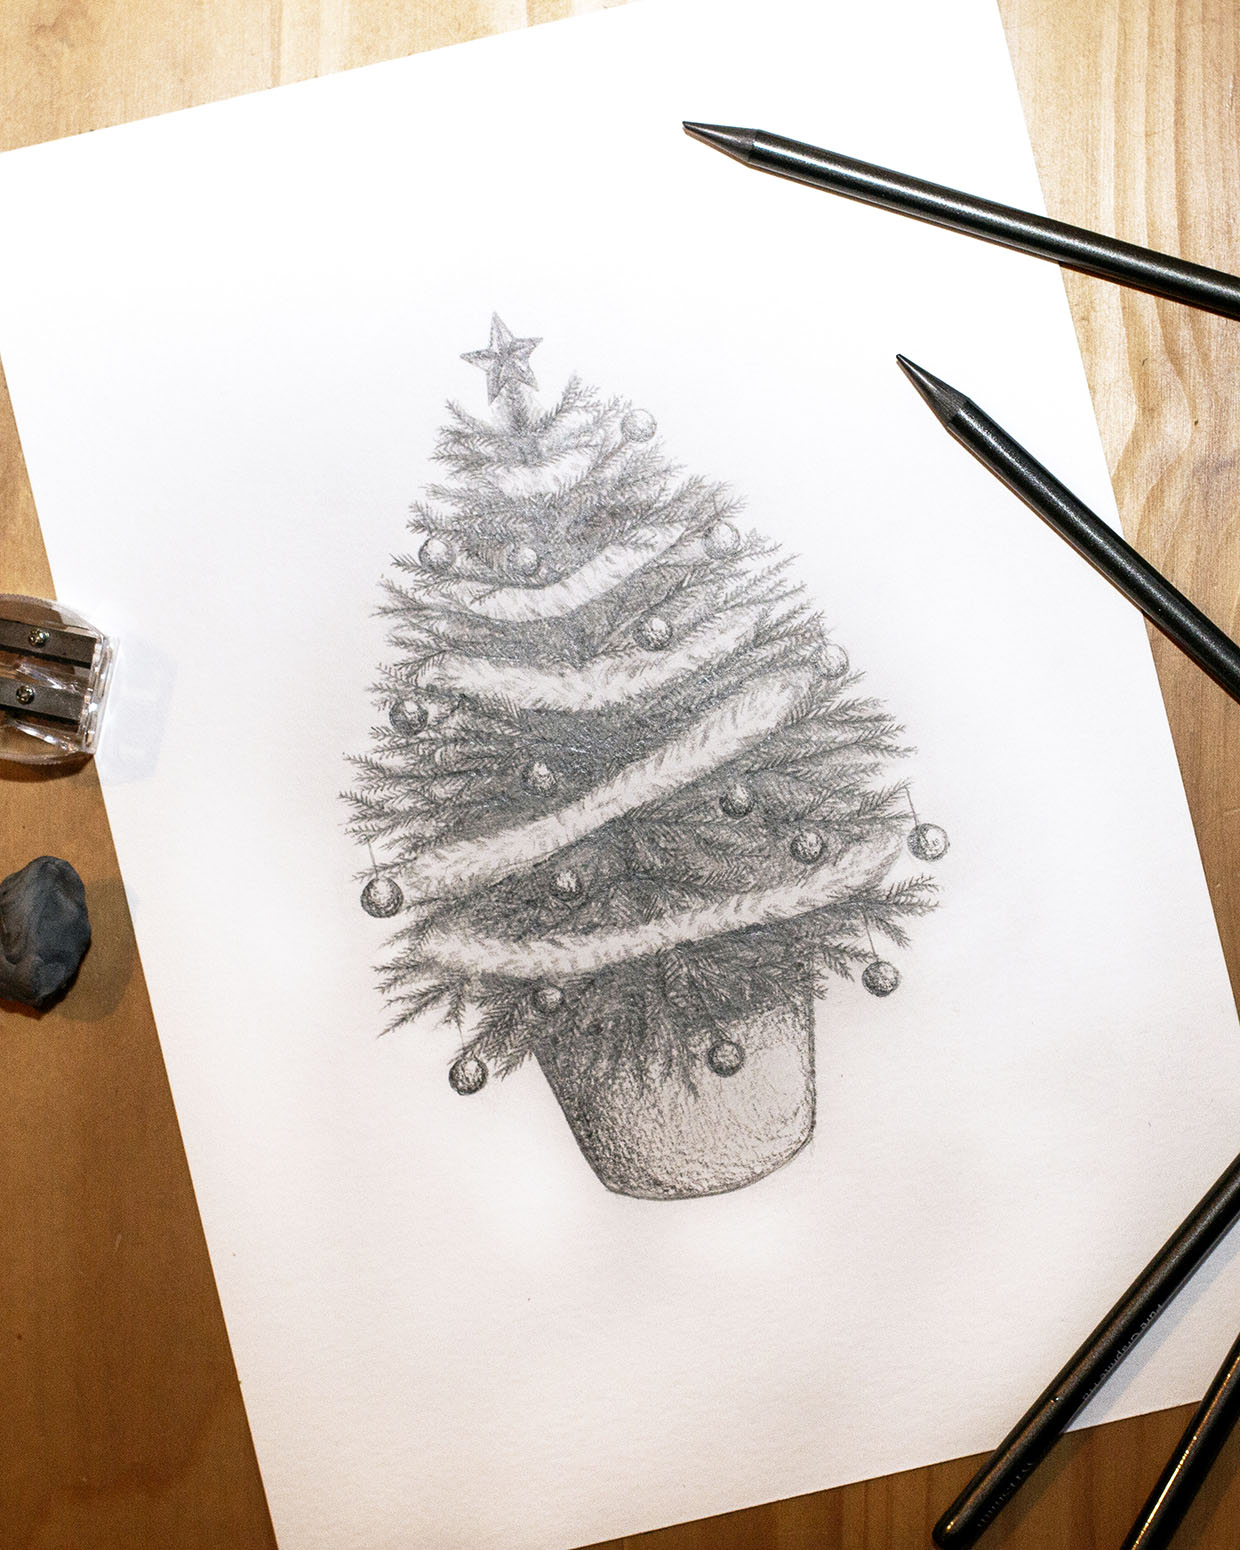 How To Draw A Christmas Tree: An Easy Tutorial | Caribu